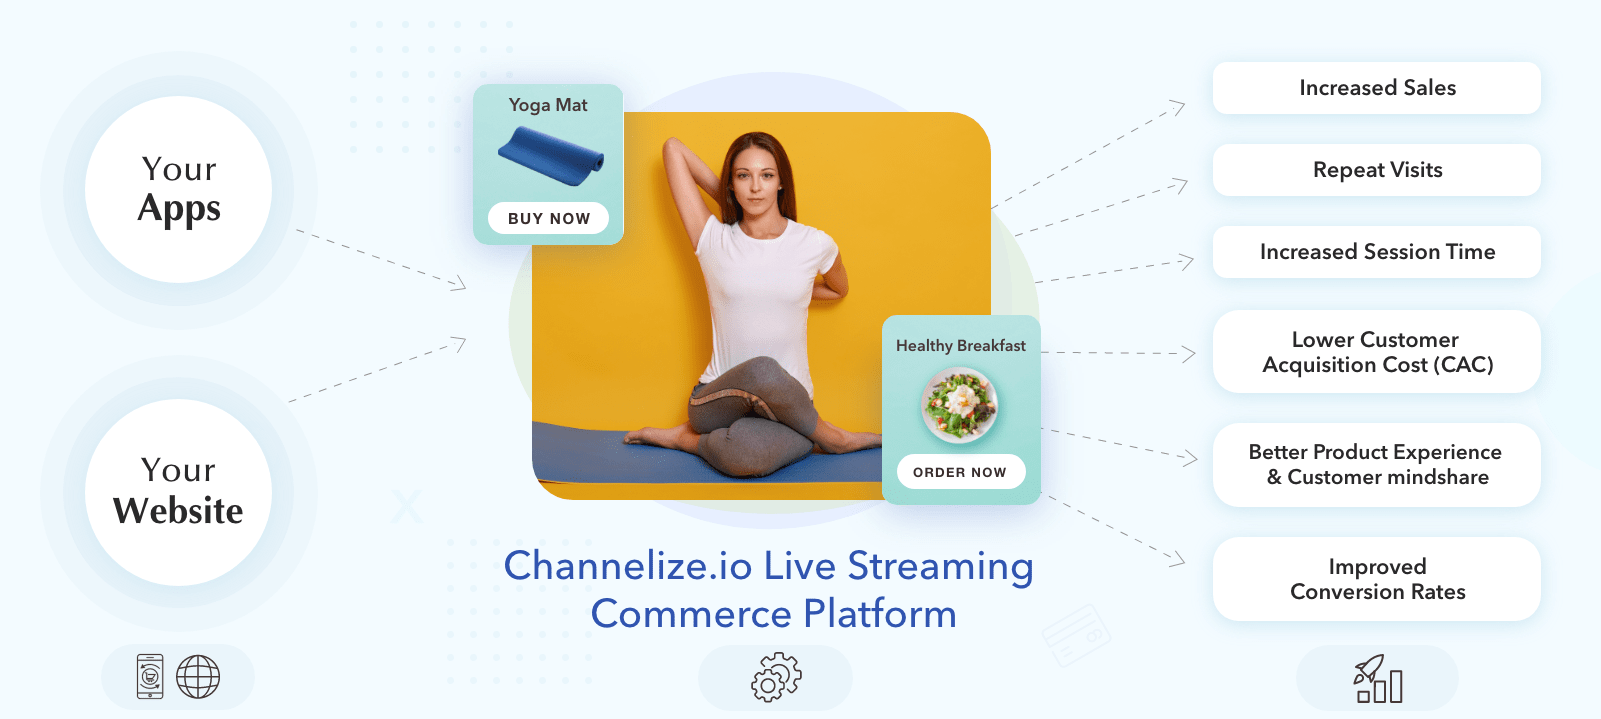 Features of Live Commerce Platform